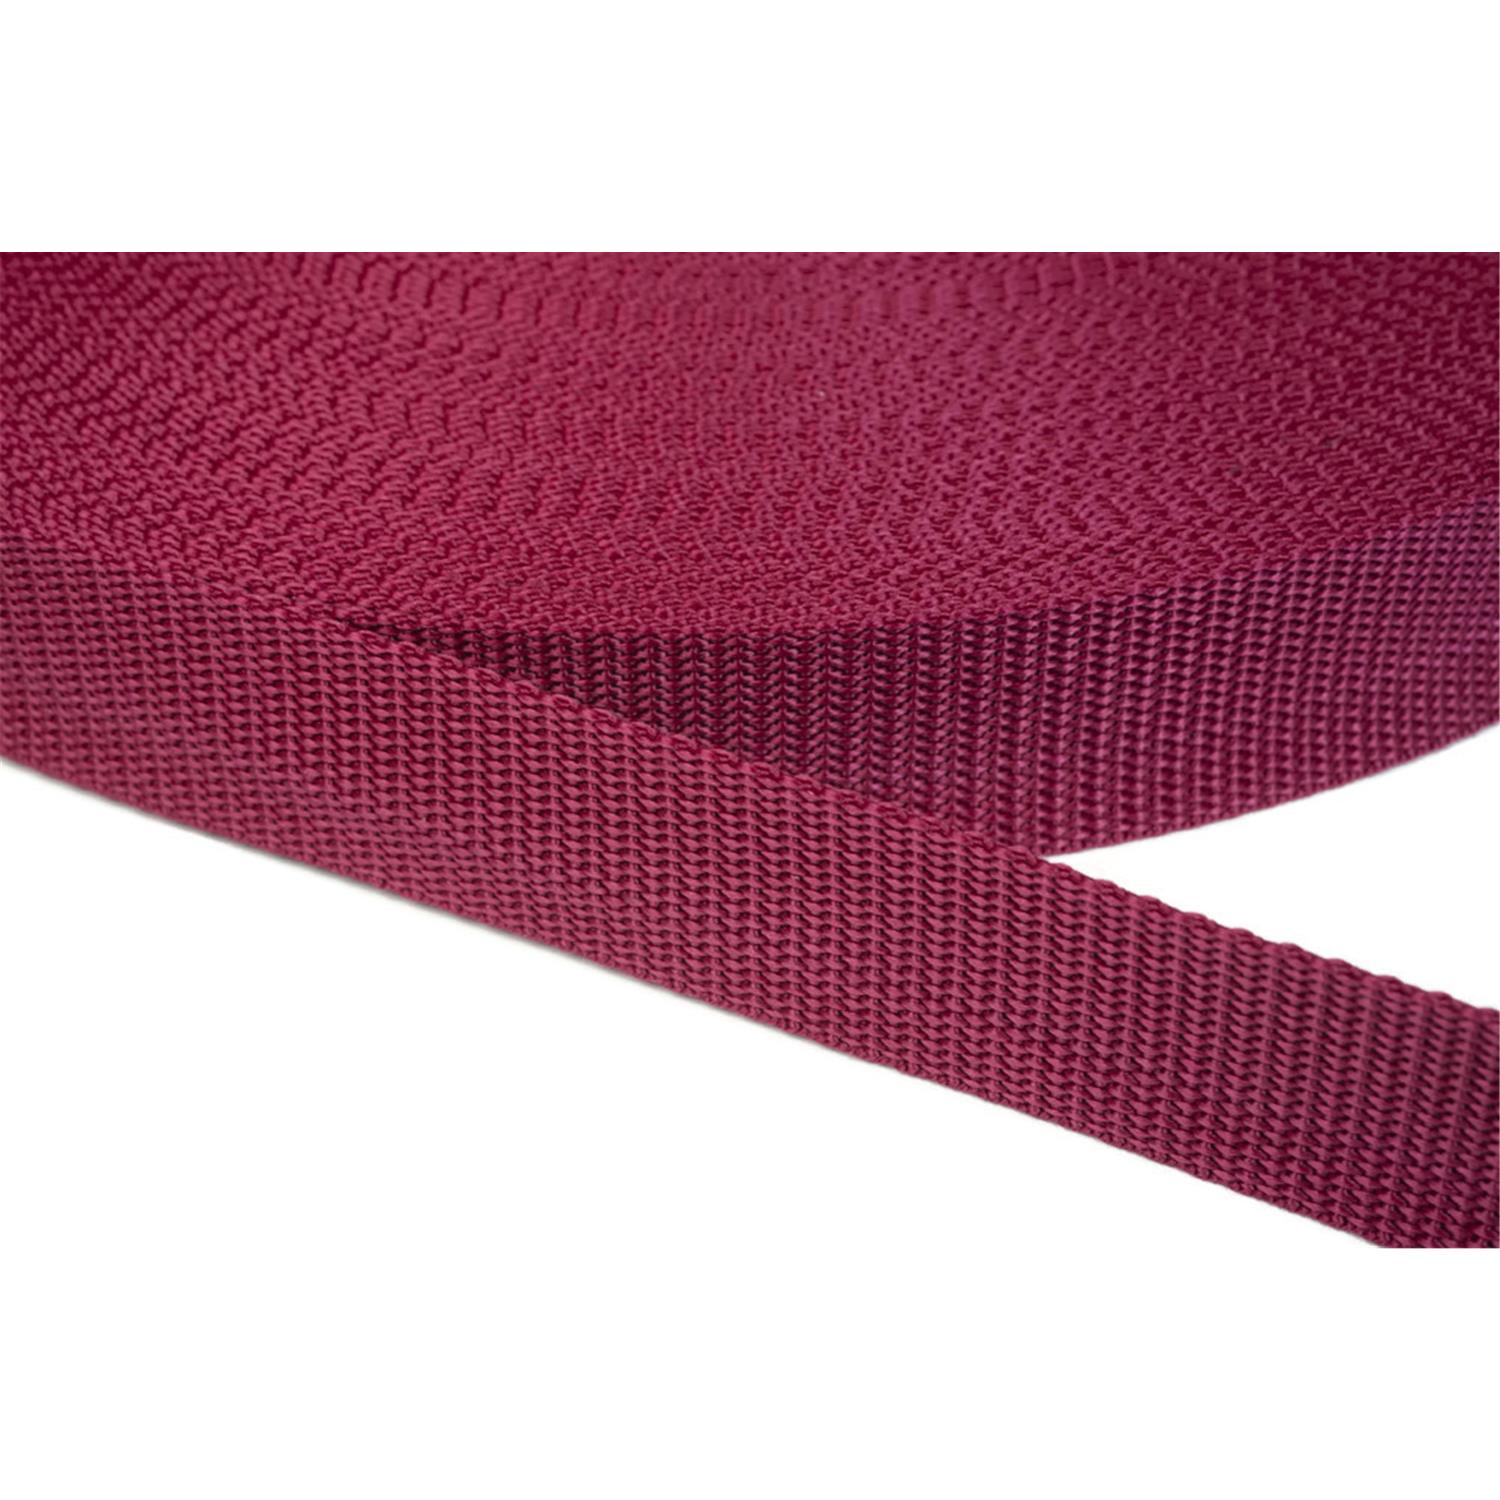 Gurtband 40mm breit aus Polypropylen in 41 Farben 21 - dunkelrot 6 Meter